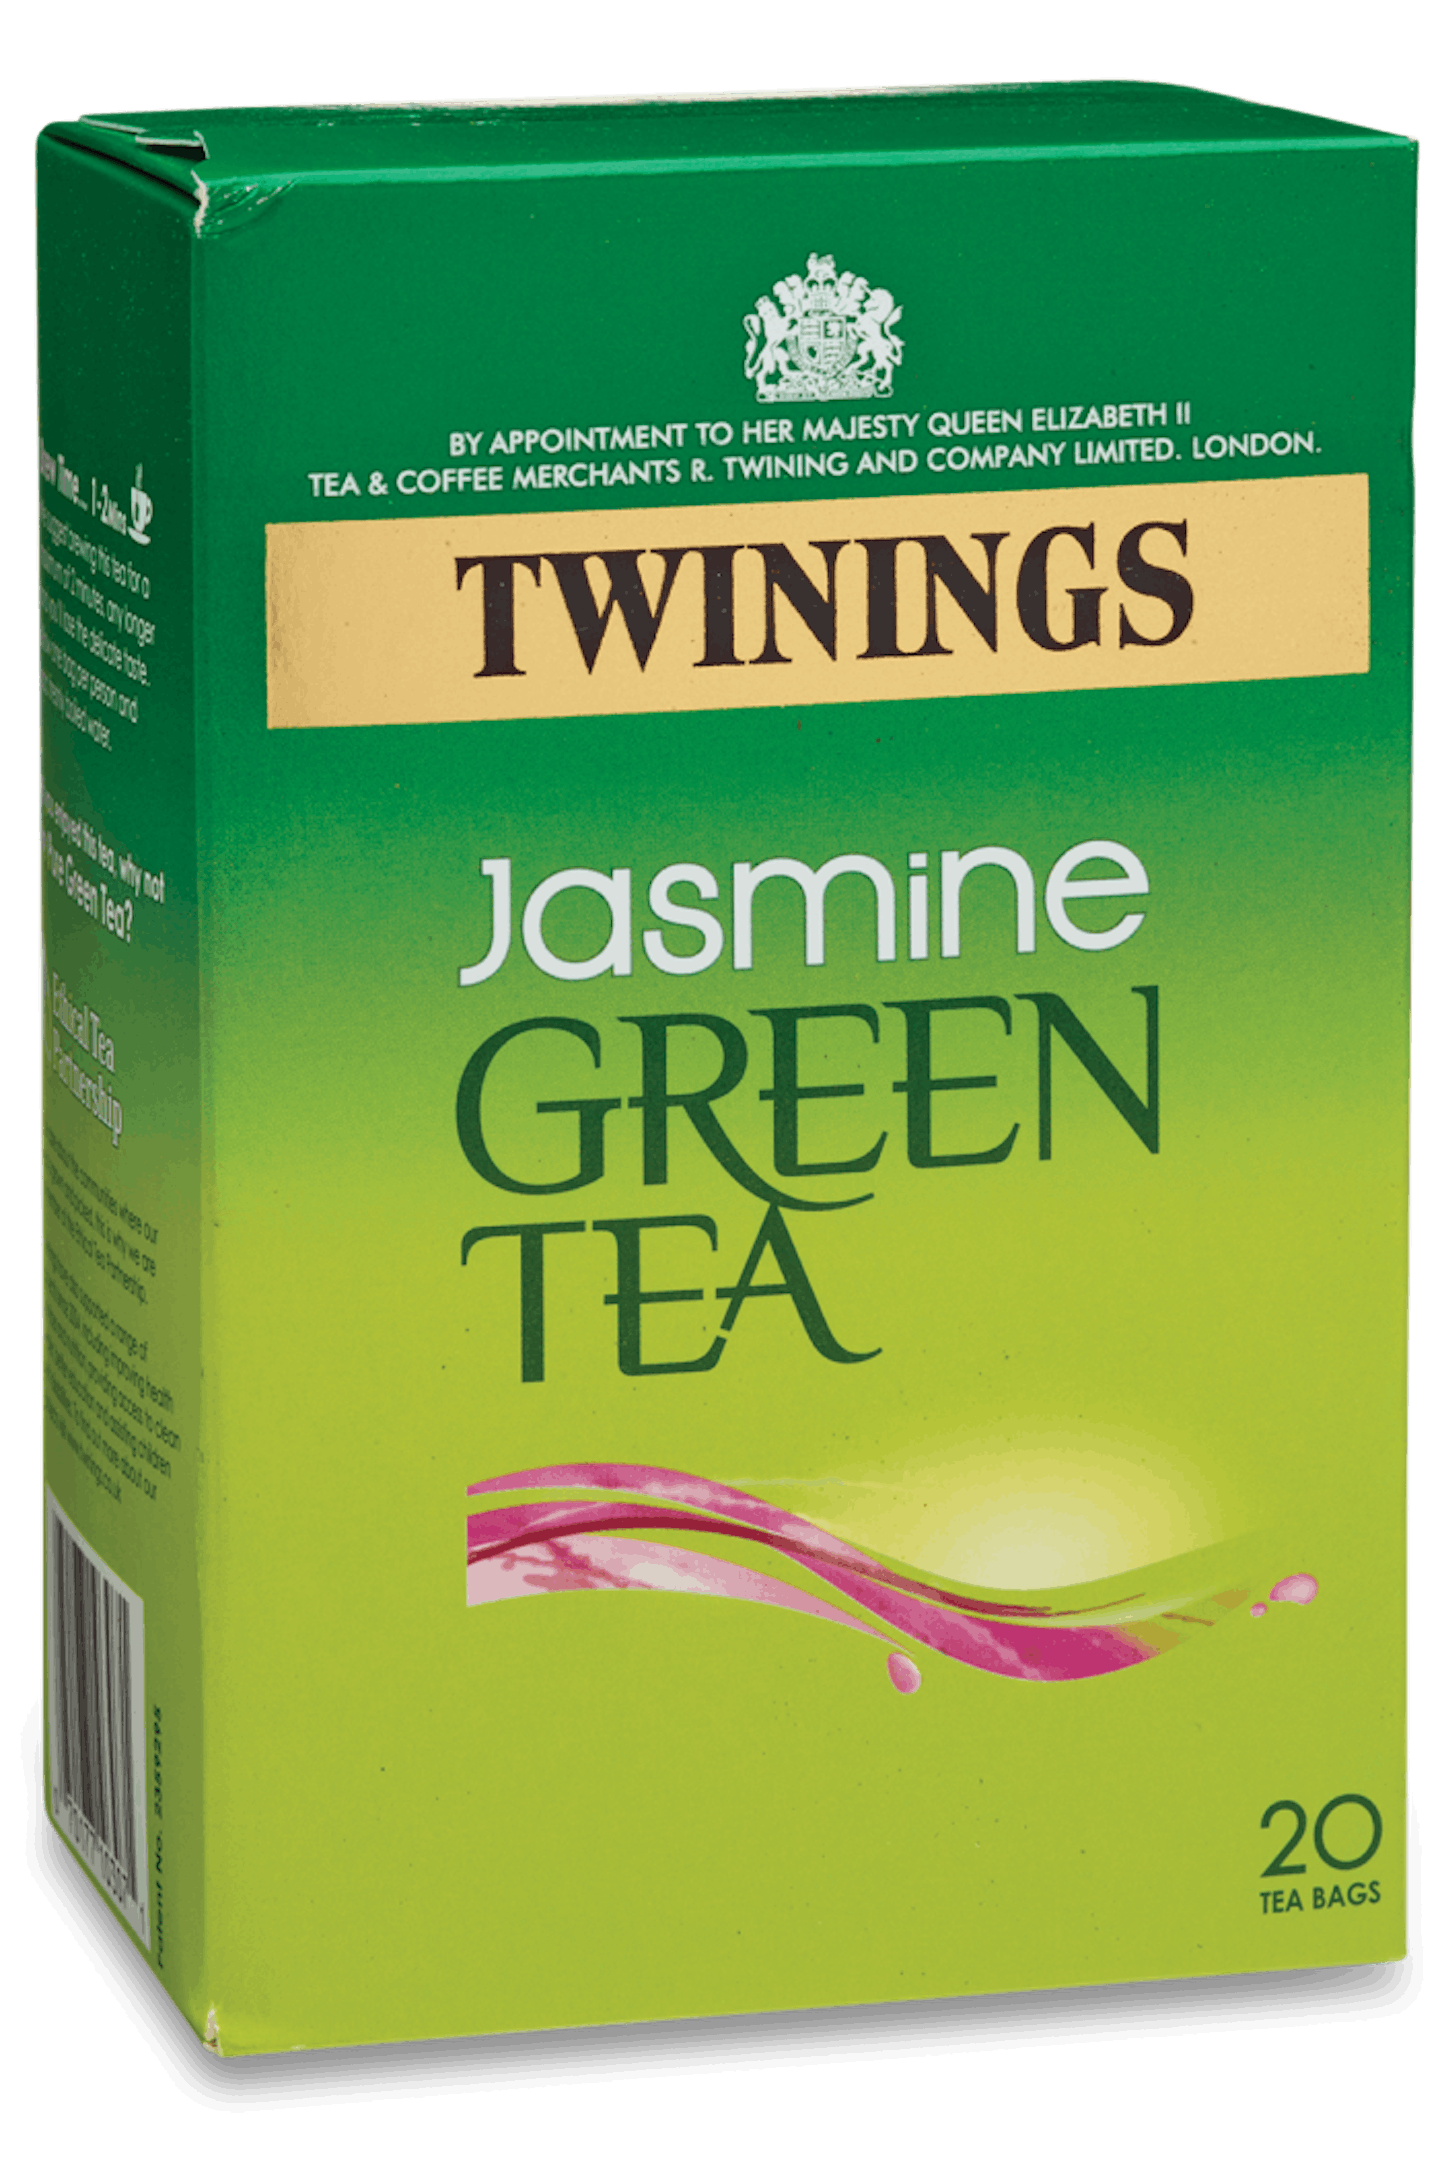 Twinings Jasmine Green Tea, £1.69